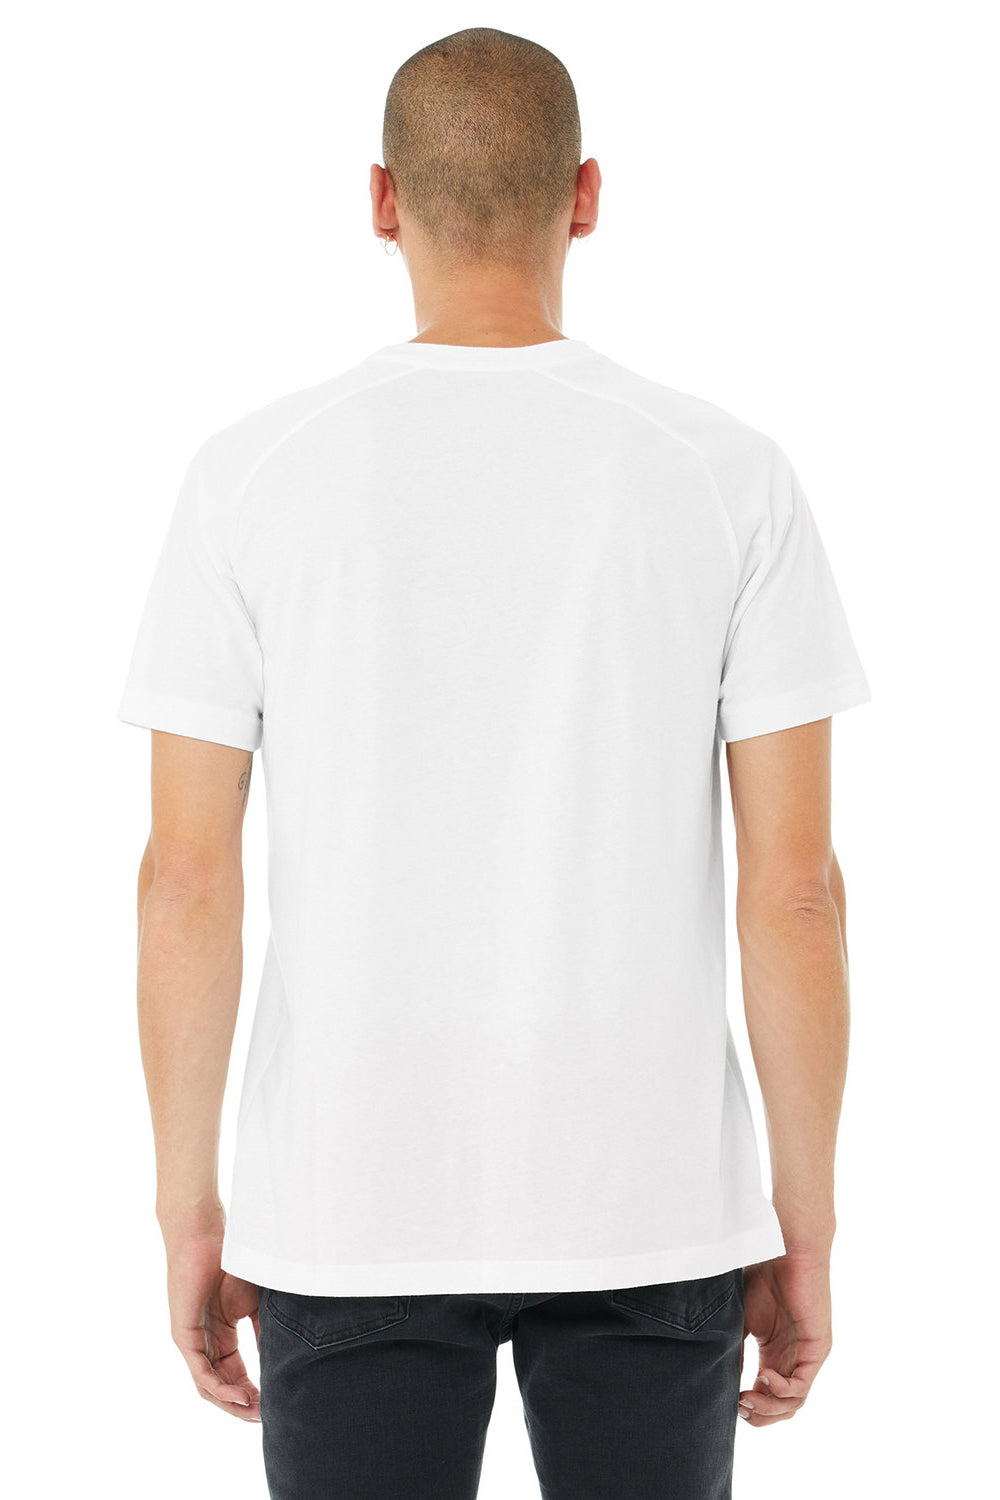 Bella + Canvas 3201 Mens CVC Raglan Short Sleeve Crewneck T-Shirt Solid White Model Back